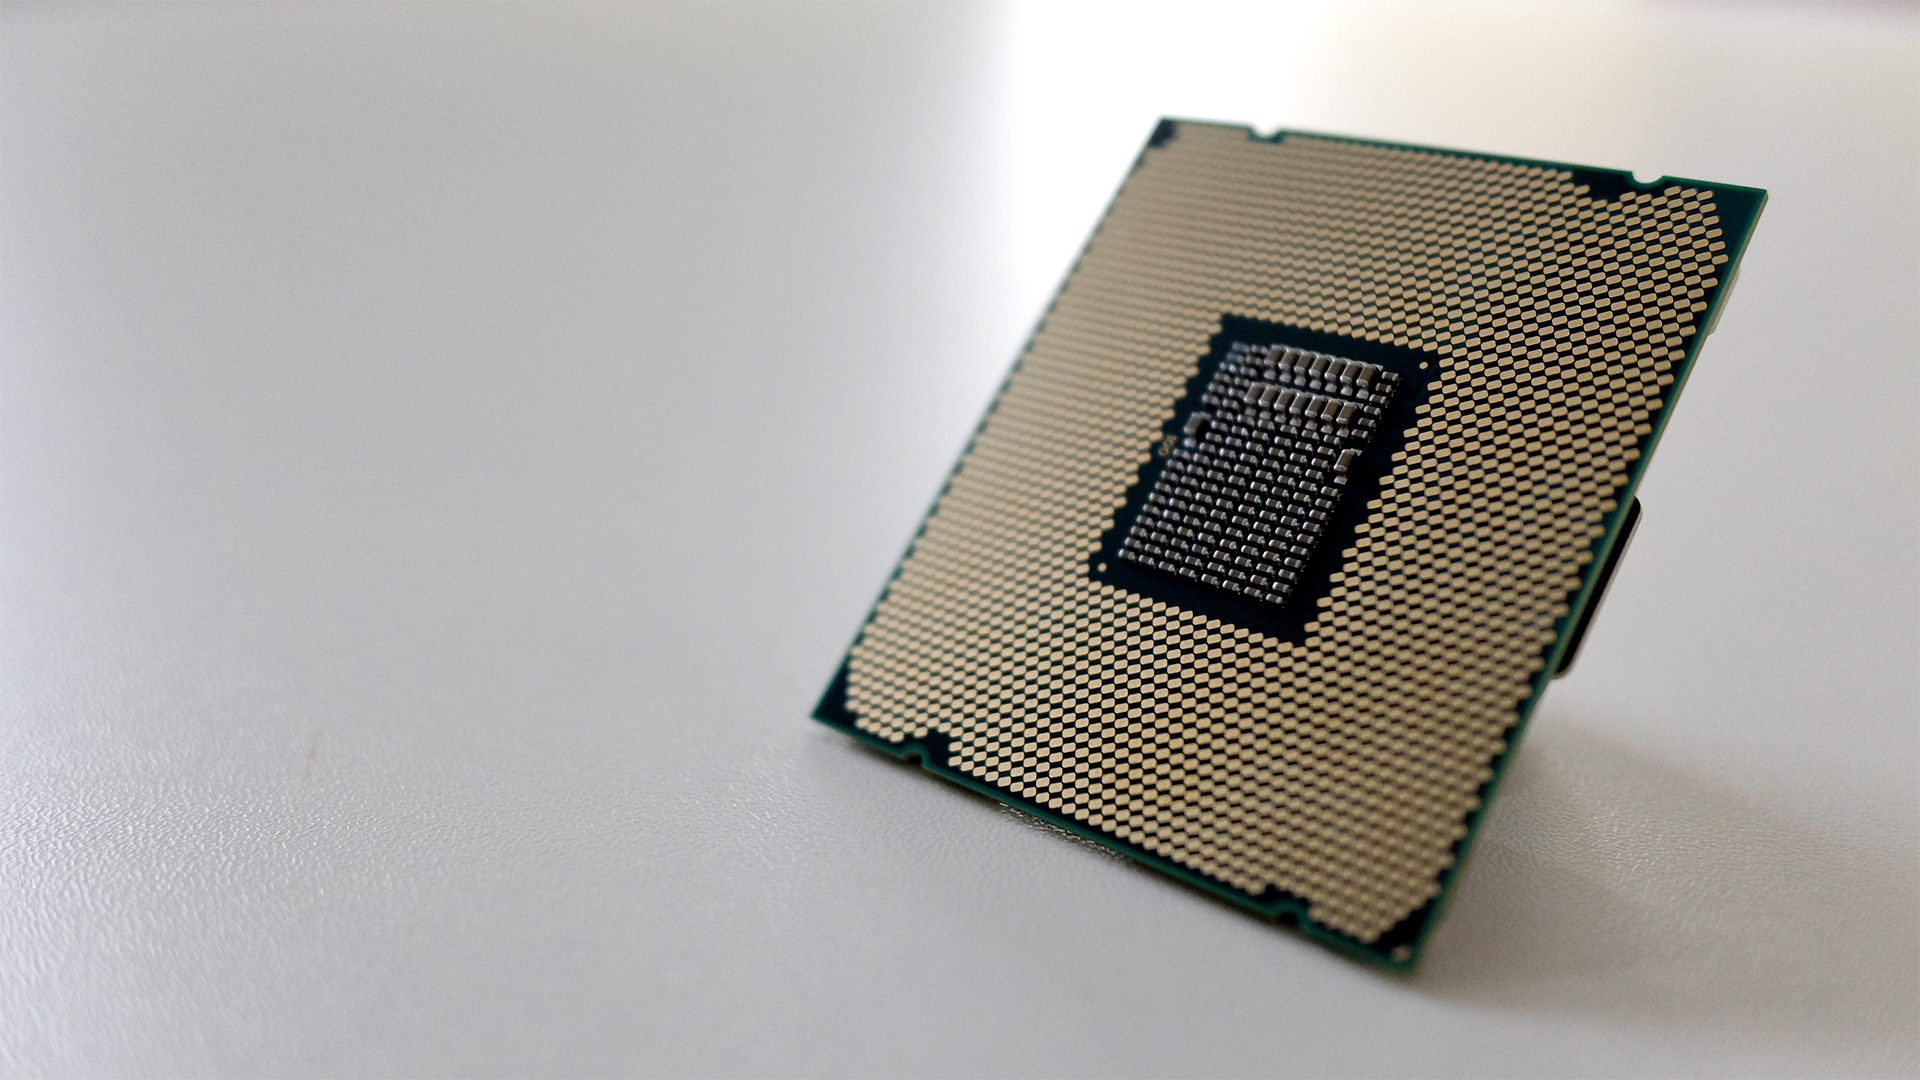 Latest Intel 12th-gen leak gives us a glimpse beyond the desktop